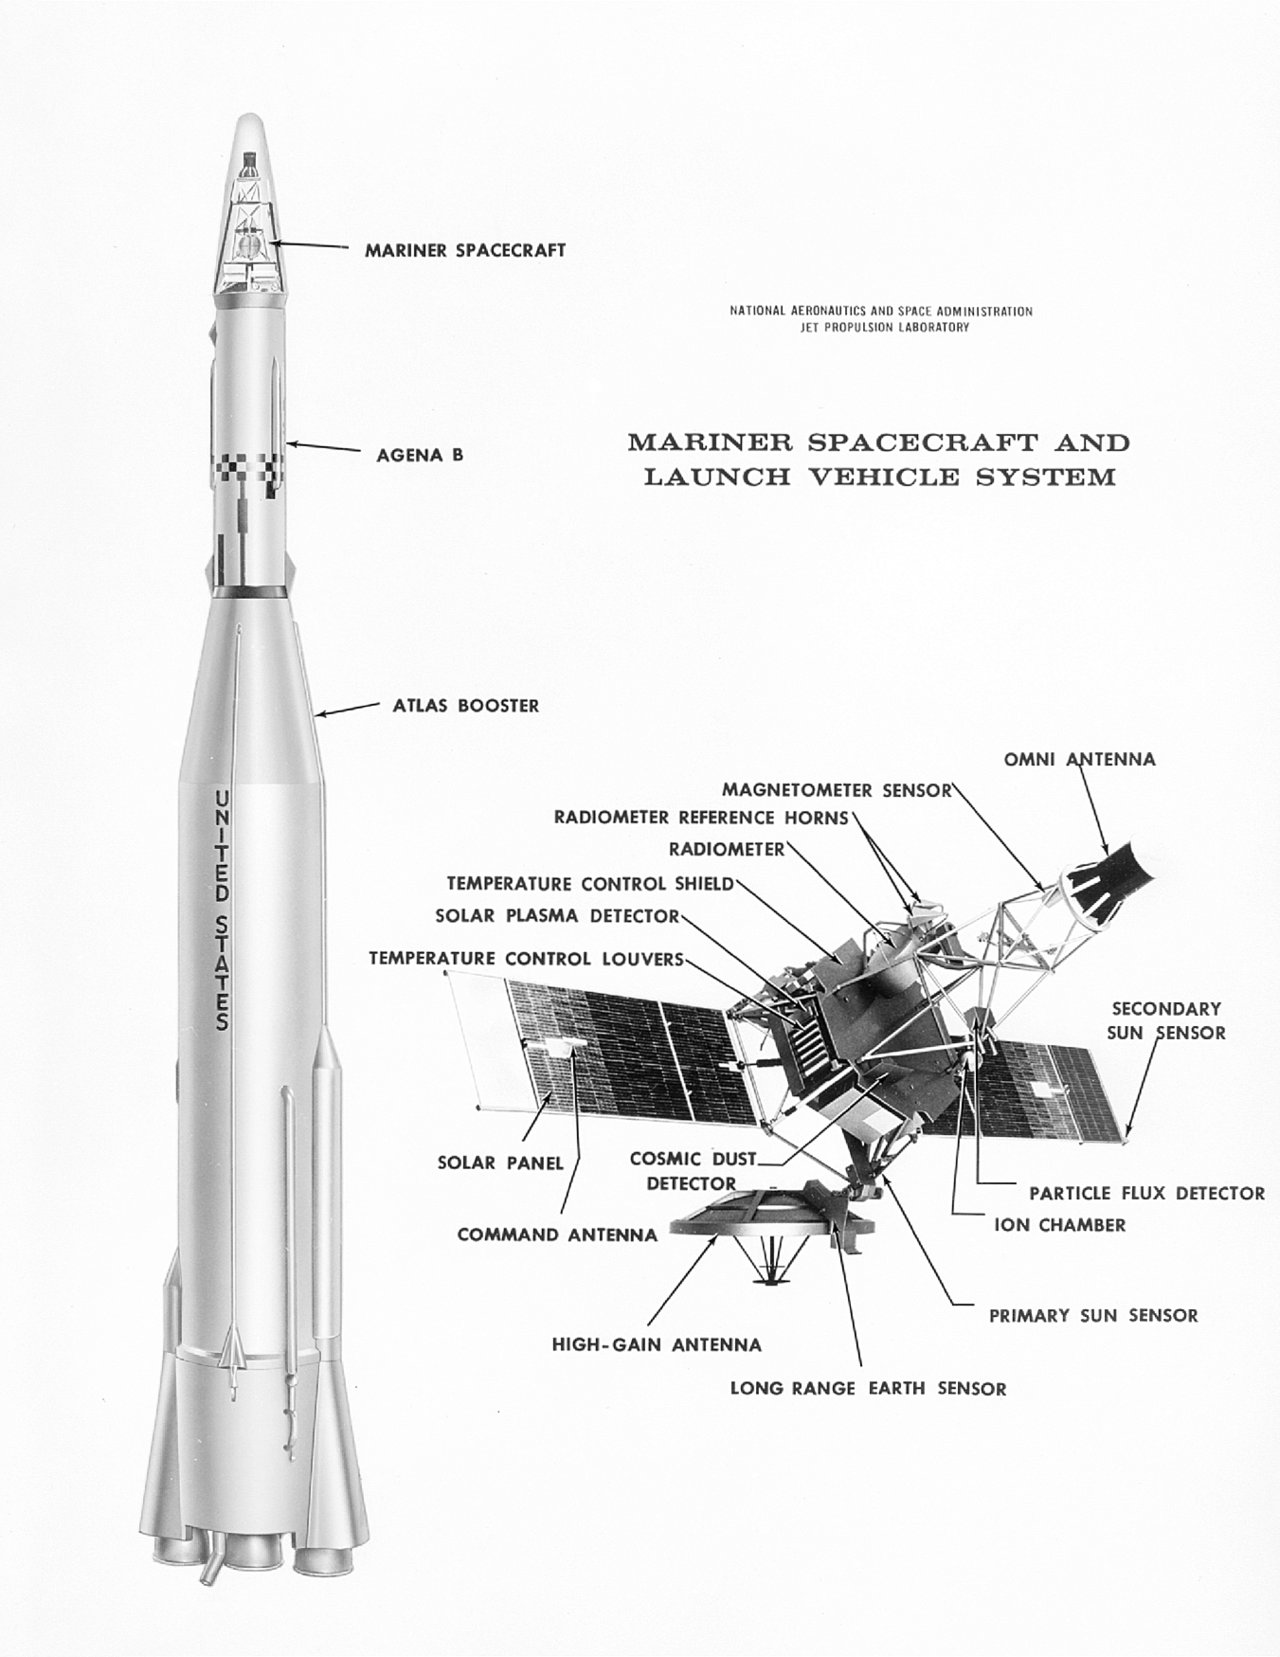 Illustrated diagram of the Atlas-Agena rocket and Mariner spaecraft combination.